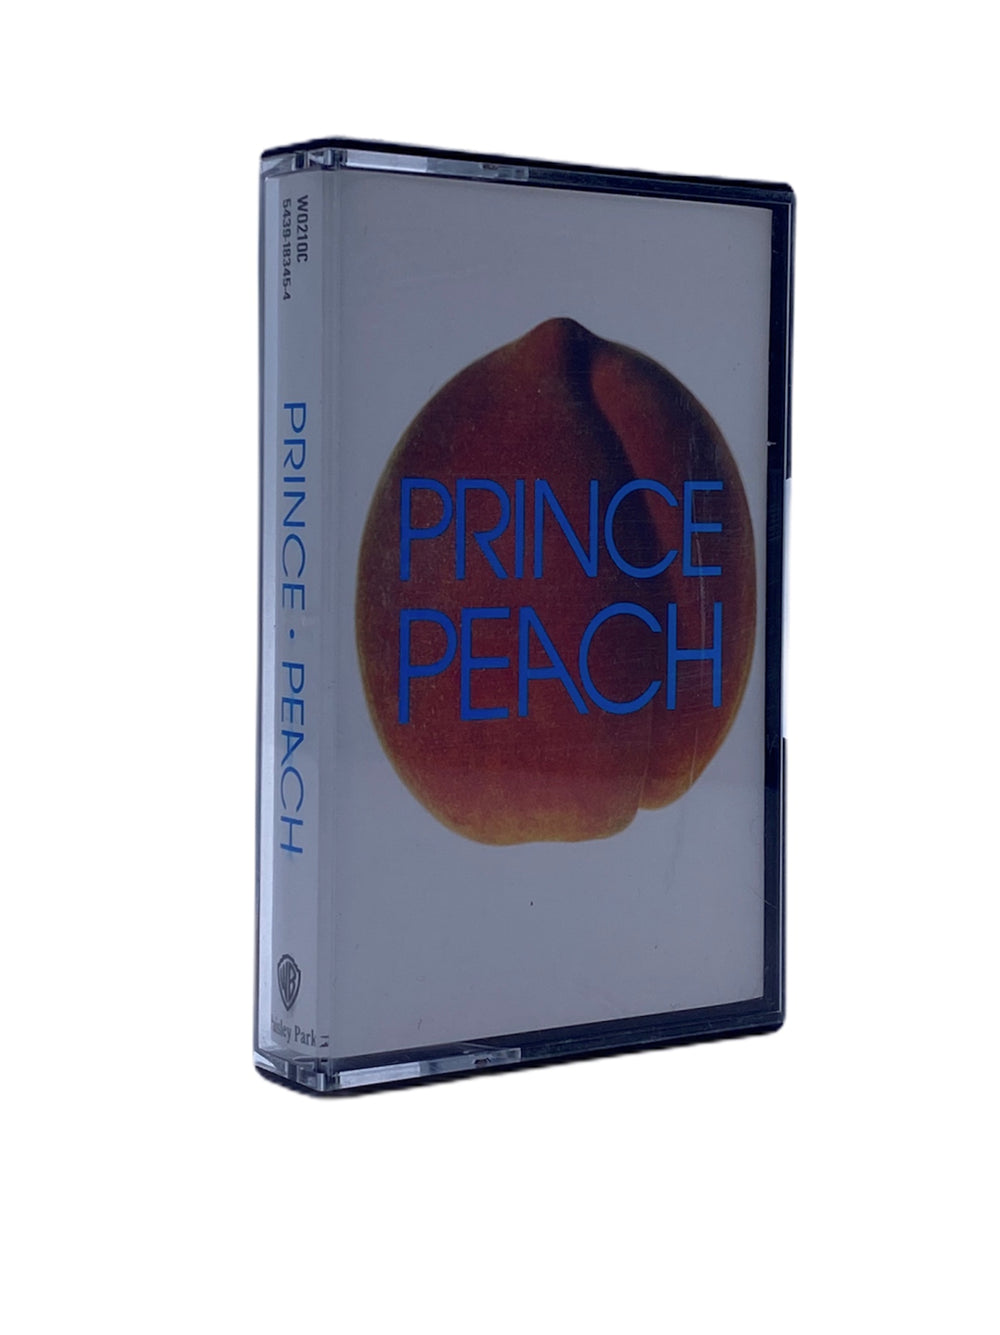 Prince – Peach Cassette Single UK Preloved: 1992